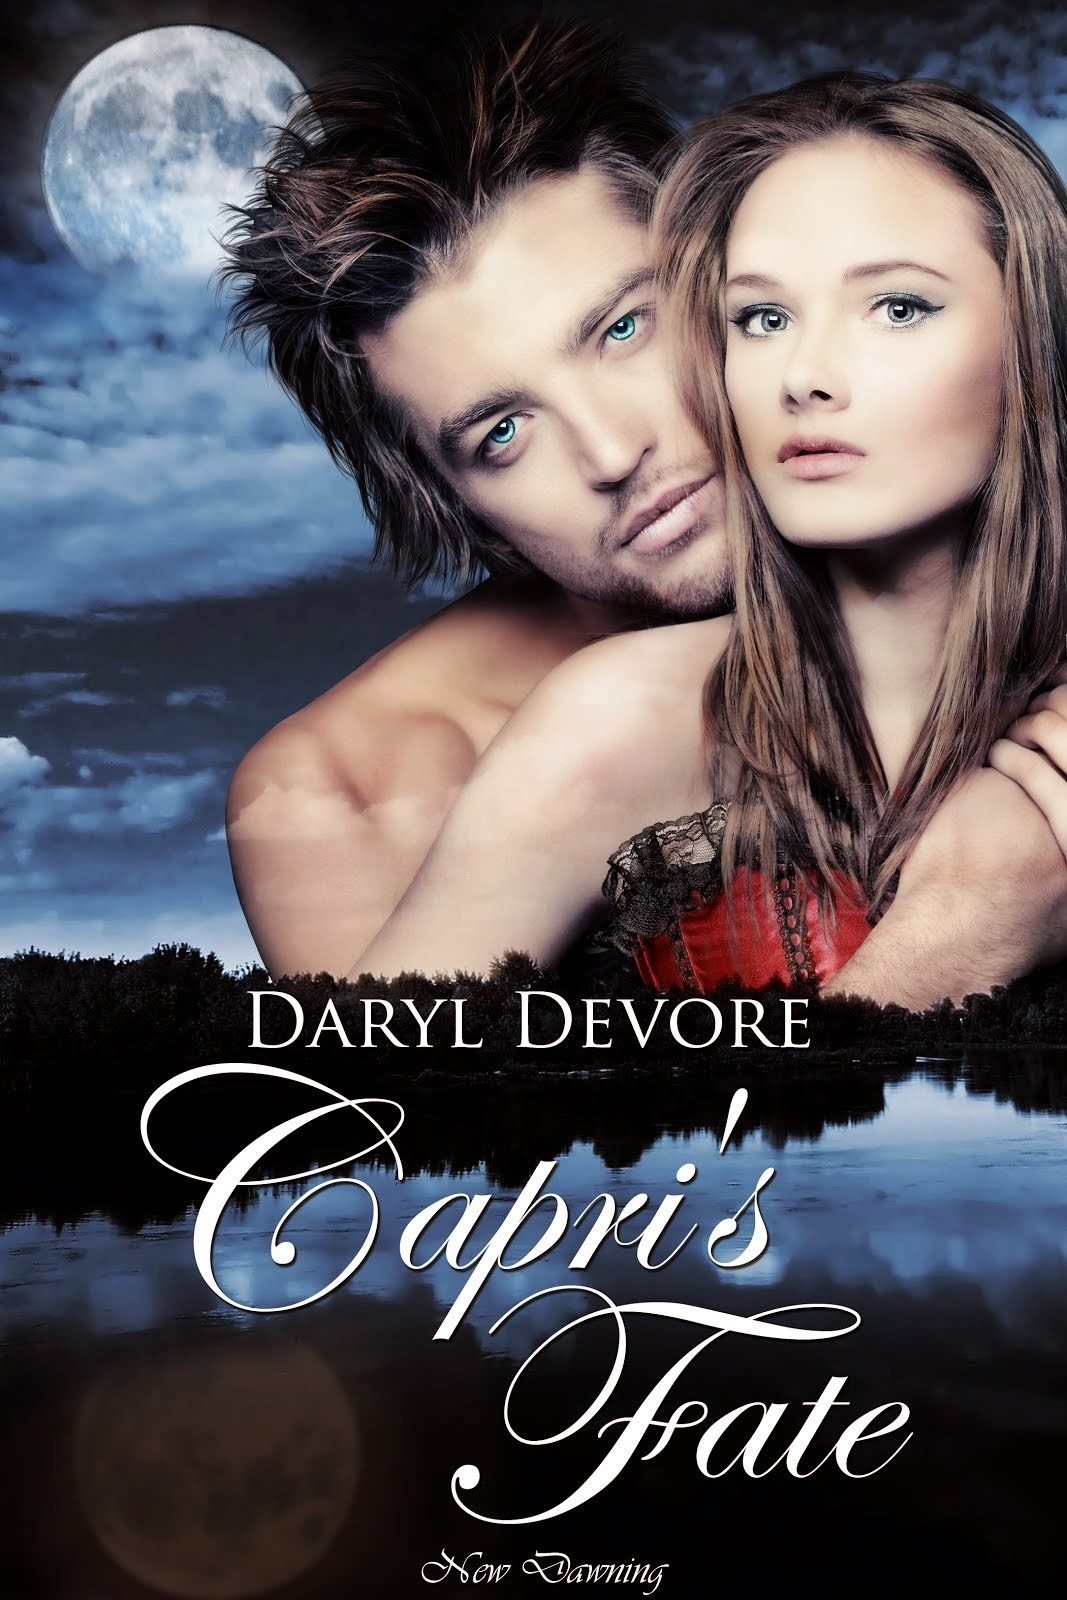 http://www.amazon.com/Capris-Paranormal-Romance-Daryl-Devore-ebook/dp/B00CJ1I6Y0/